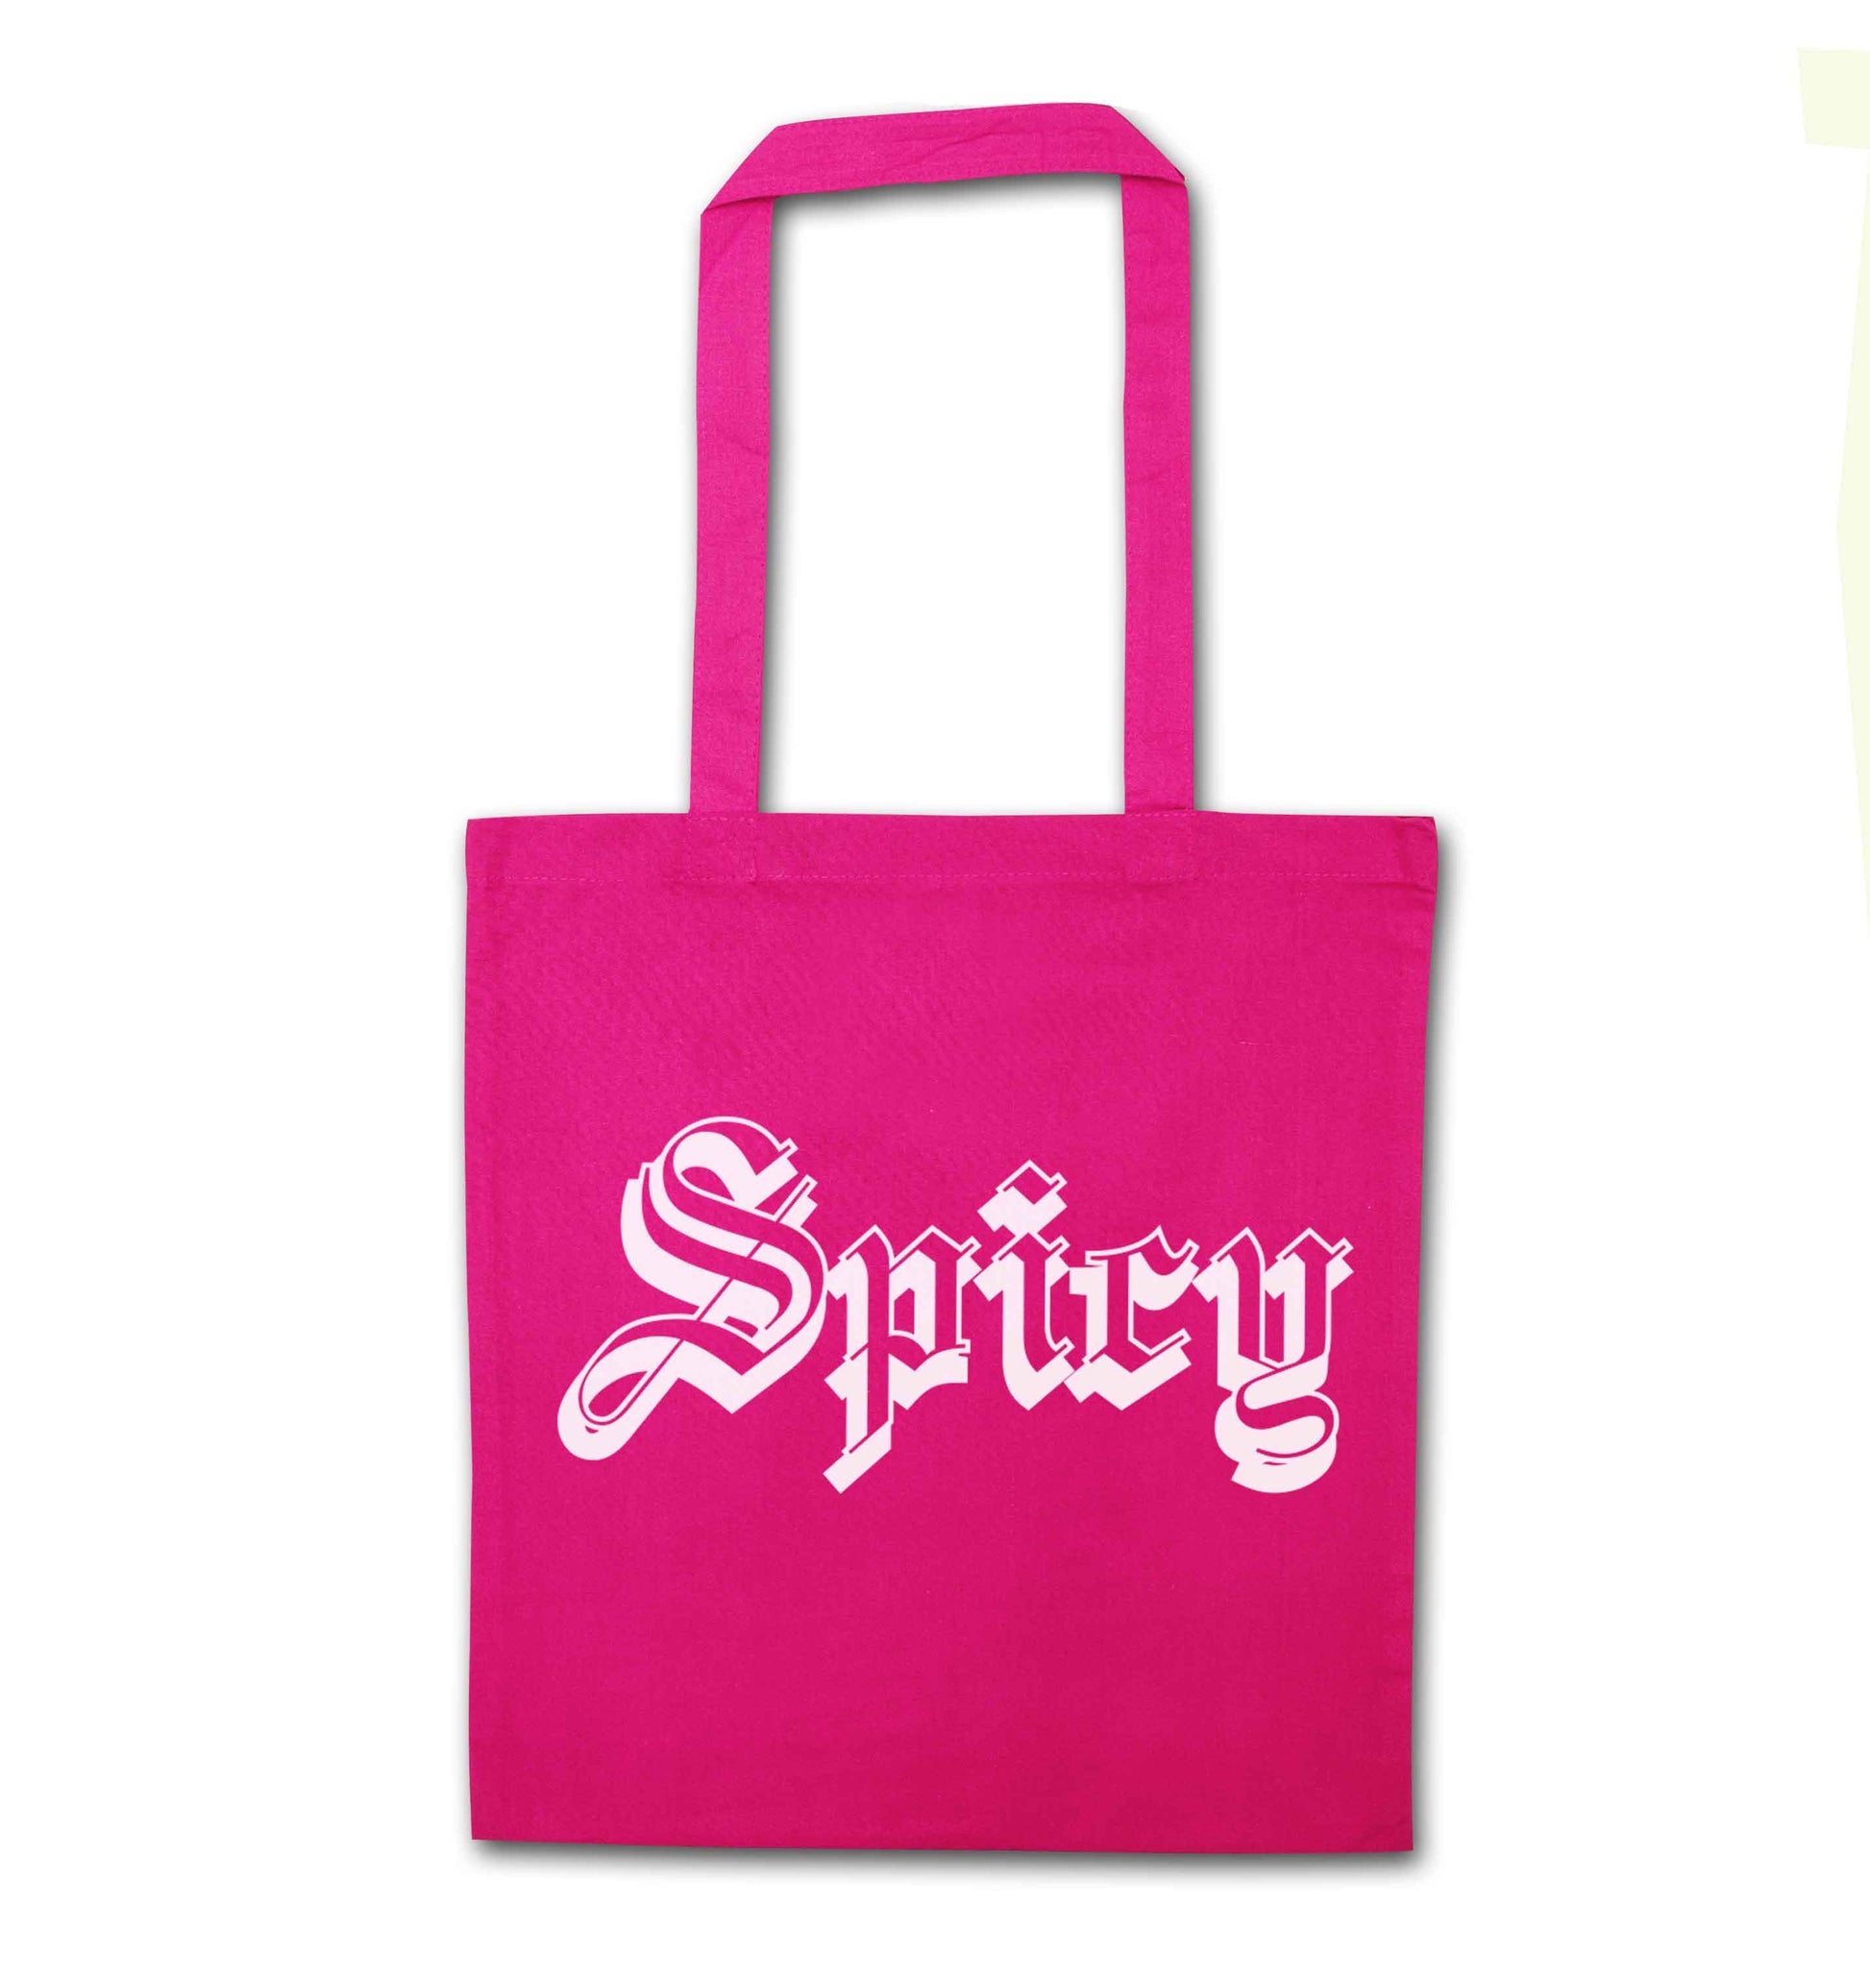 Spicy pink tote bag